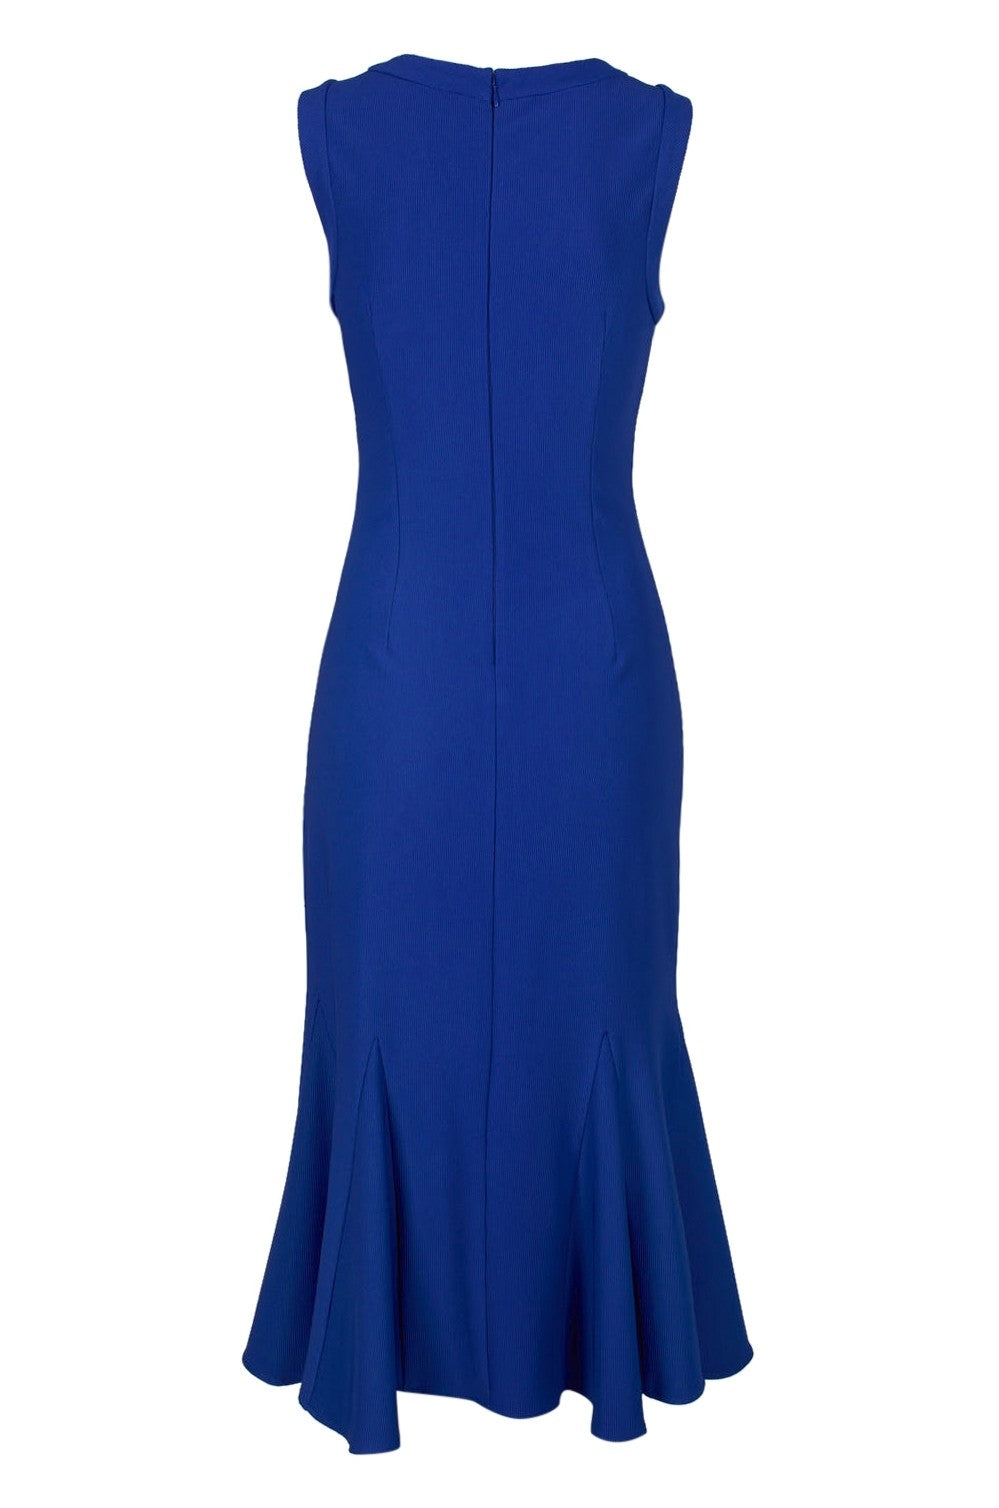 Adrianna Papell Daphne Ribbed Godet Dress - Gulf Blue